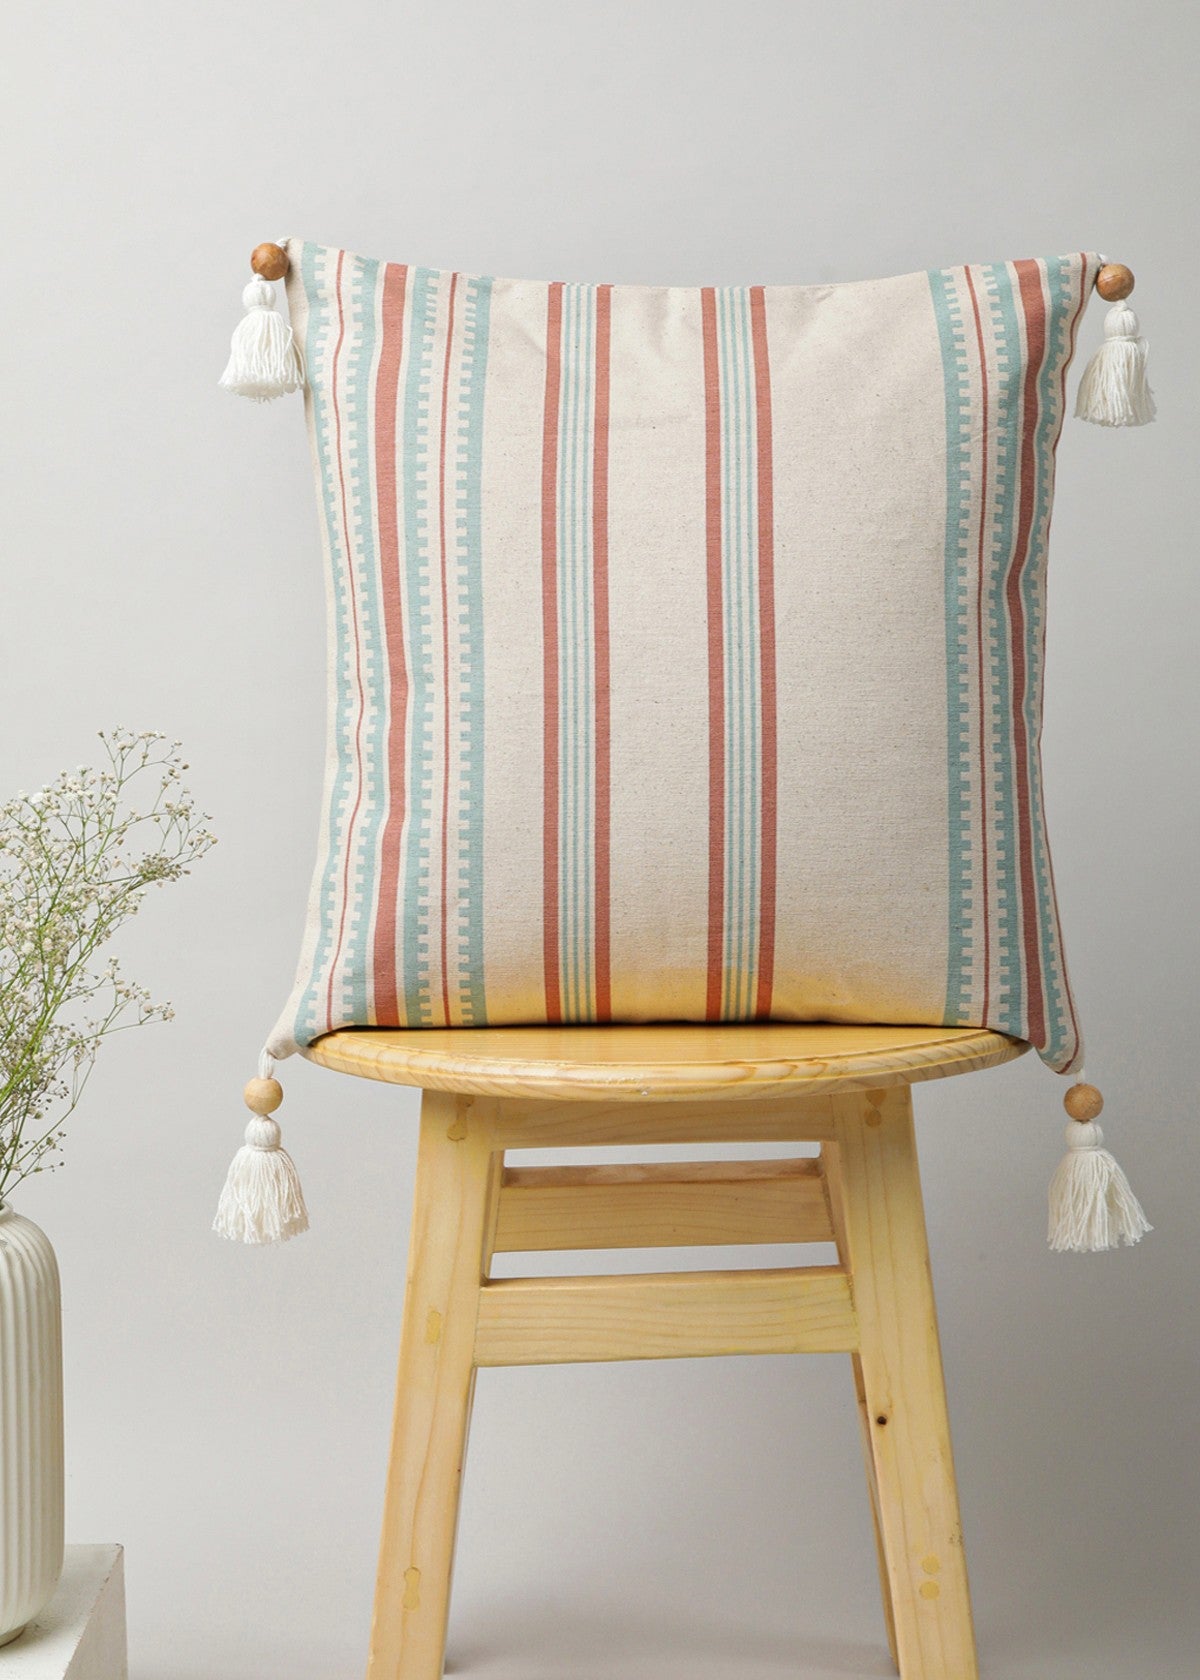 Roman stripes 100% cotton customizable geometric cushion cover for sofa - Rust and Nile blue